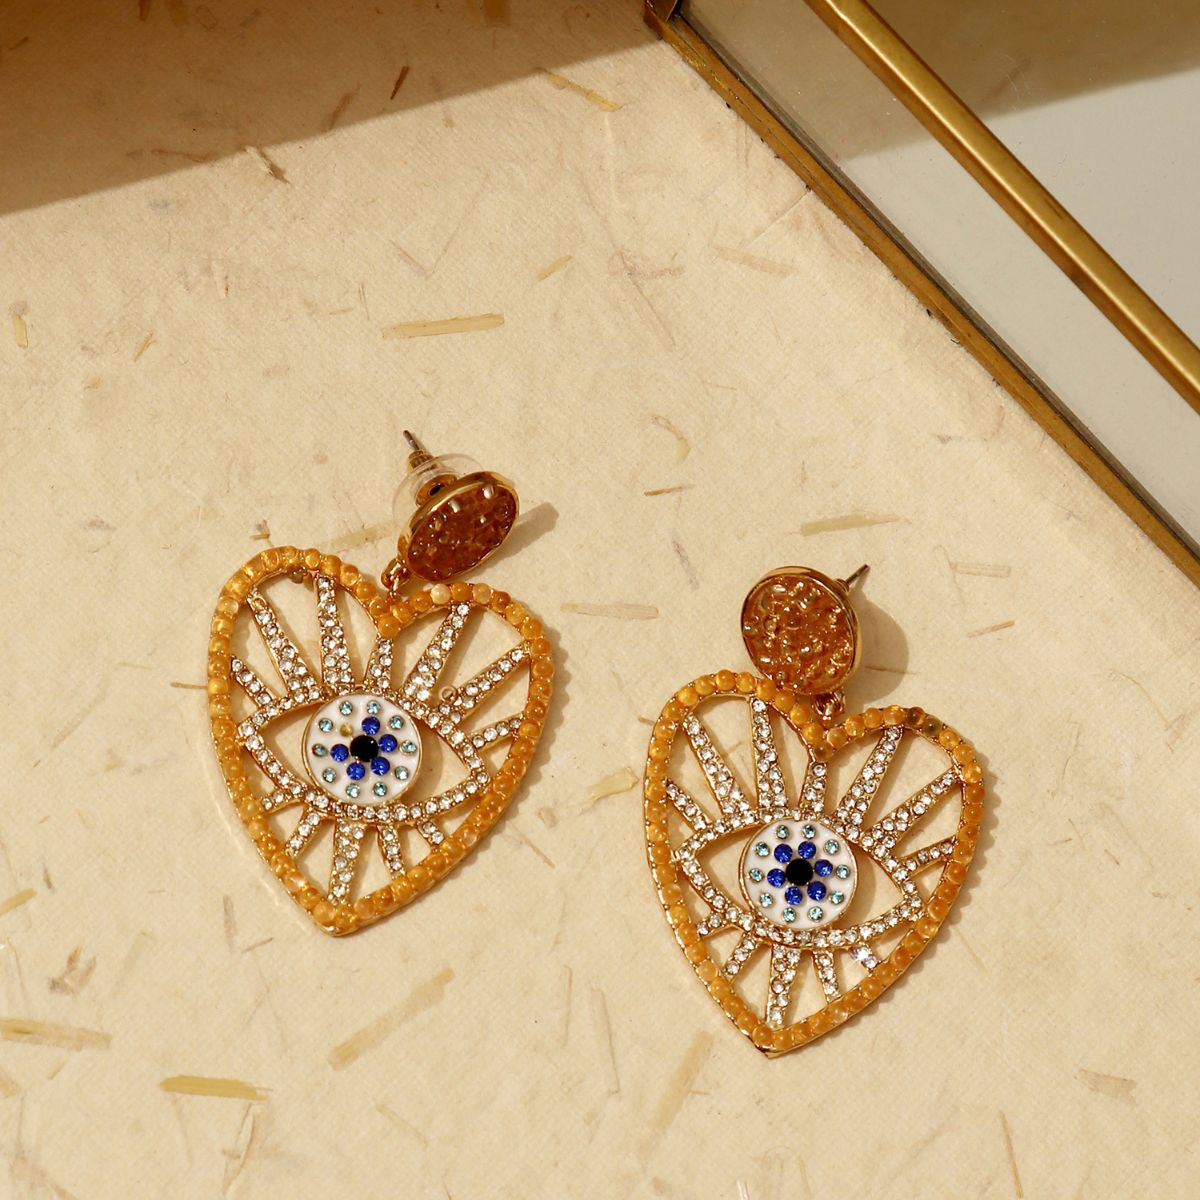 Buy Evil Eye Earrings With Swarovski Crystals Golden Shadow Online in India   Etsy